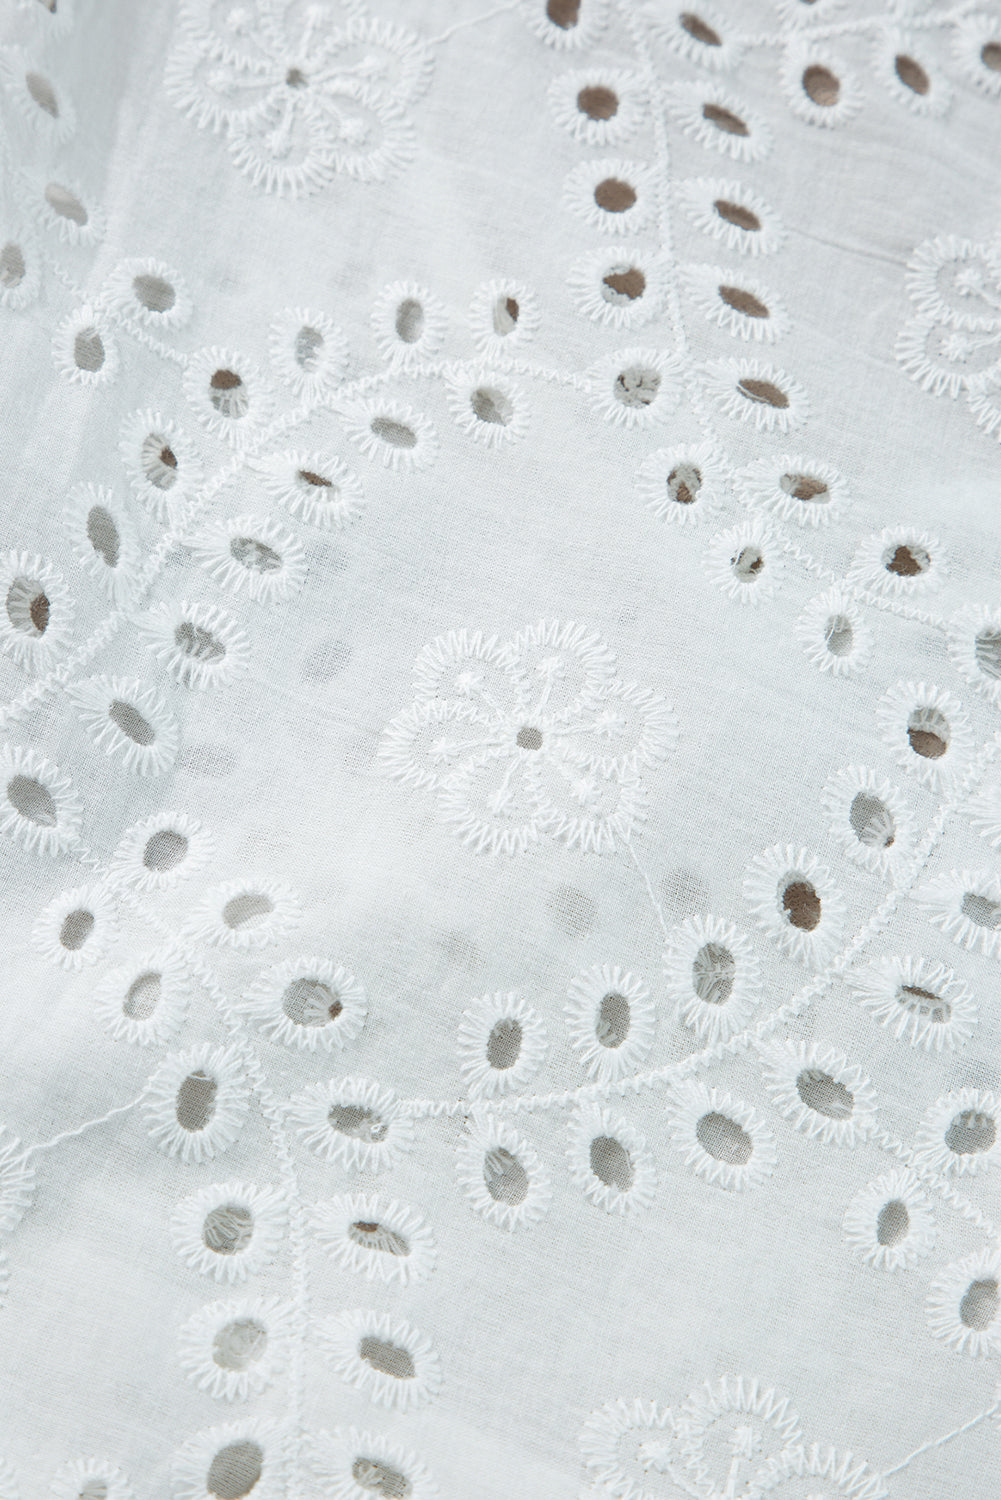 White V Neck Ruffled Embroidered Sleeveless Top